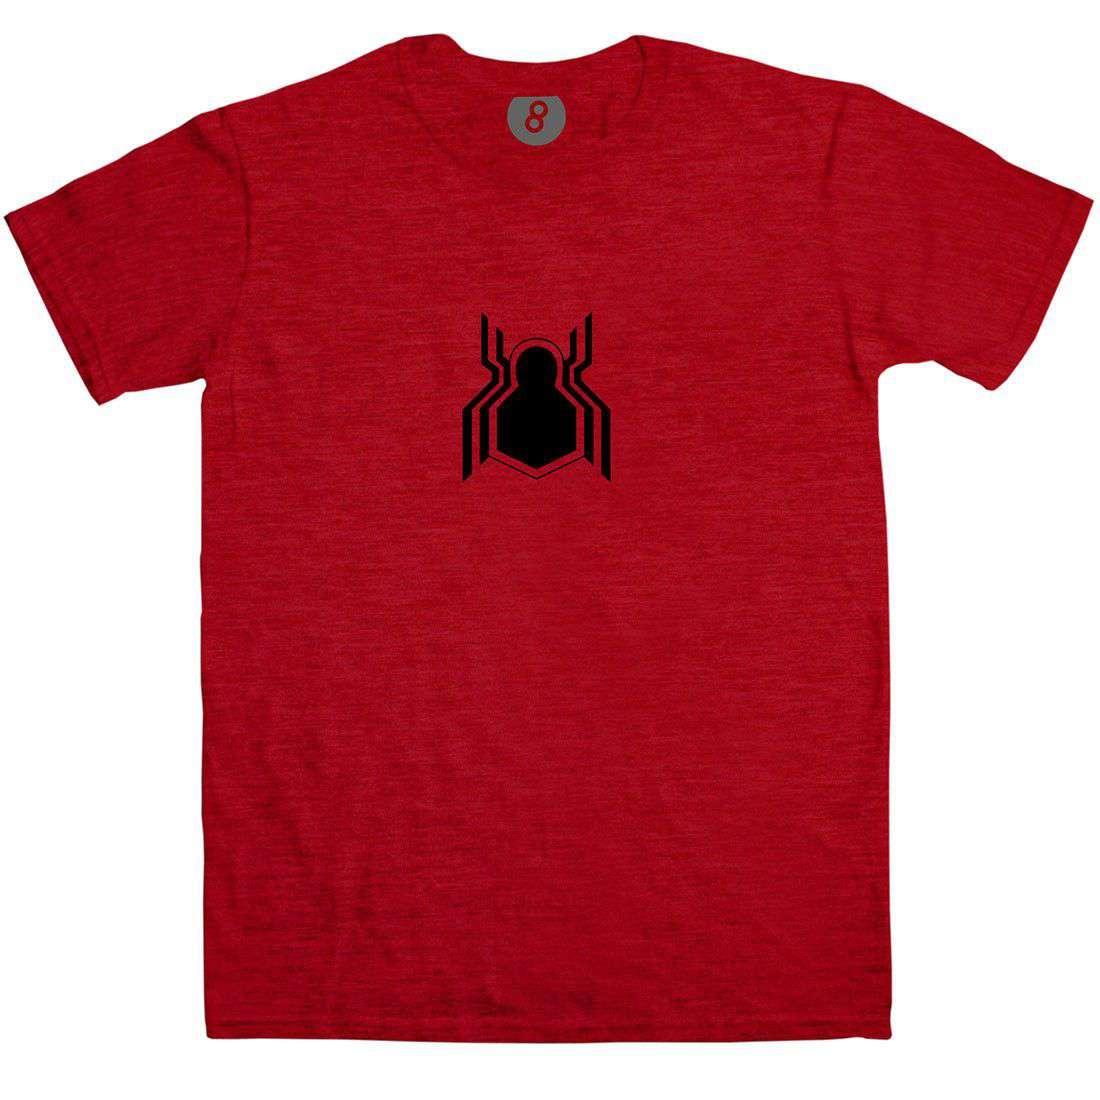 New Spidey Logo T-Shirt For Men 8Ball